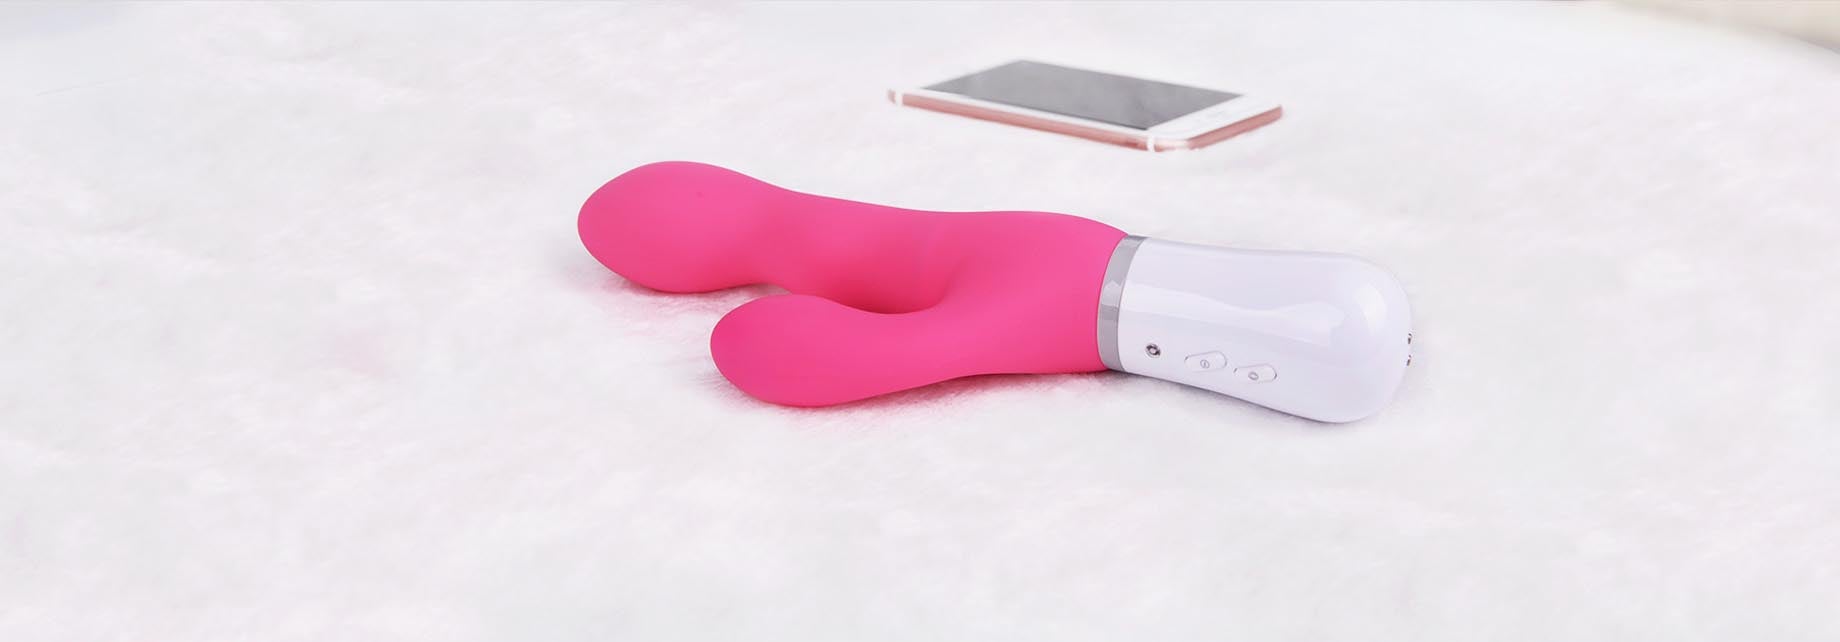 Pink rabbit vibrator next to cell phone on mattress